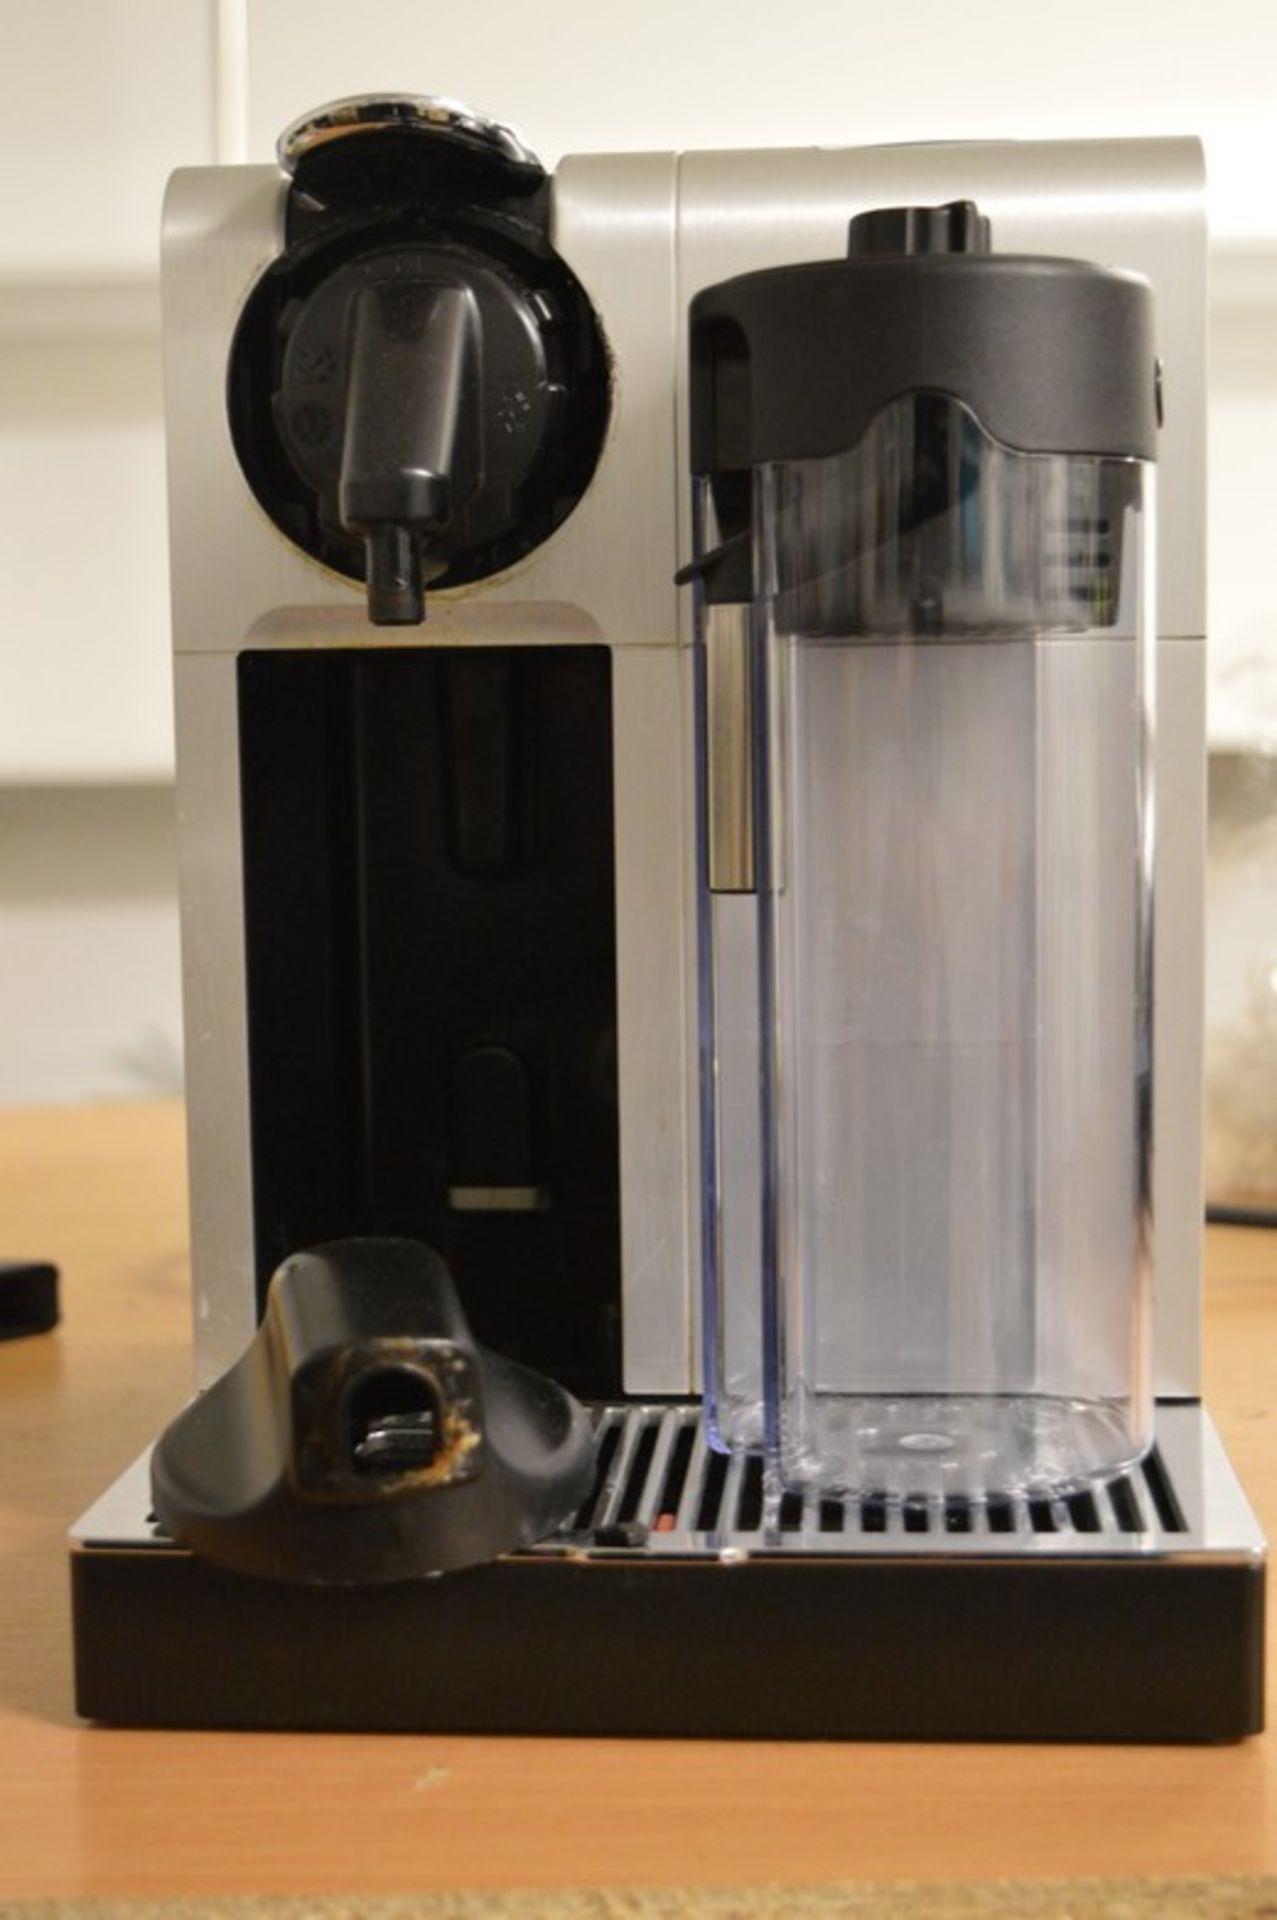 1 x DELONGHI NESPRESSO AUTOMATIC COFFEE MACHINE RRP £150 23.09.16 *PLEASE NOTE THAT THE BID PRICE IS